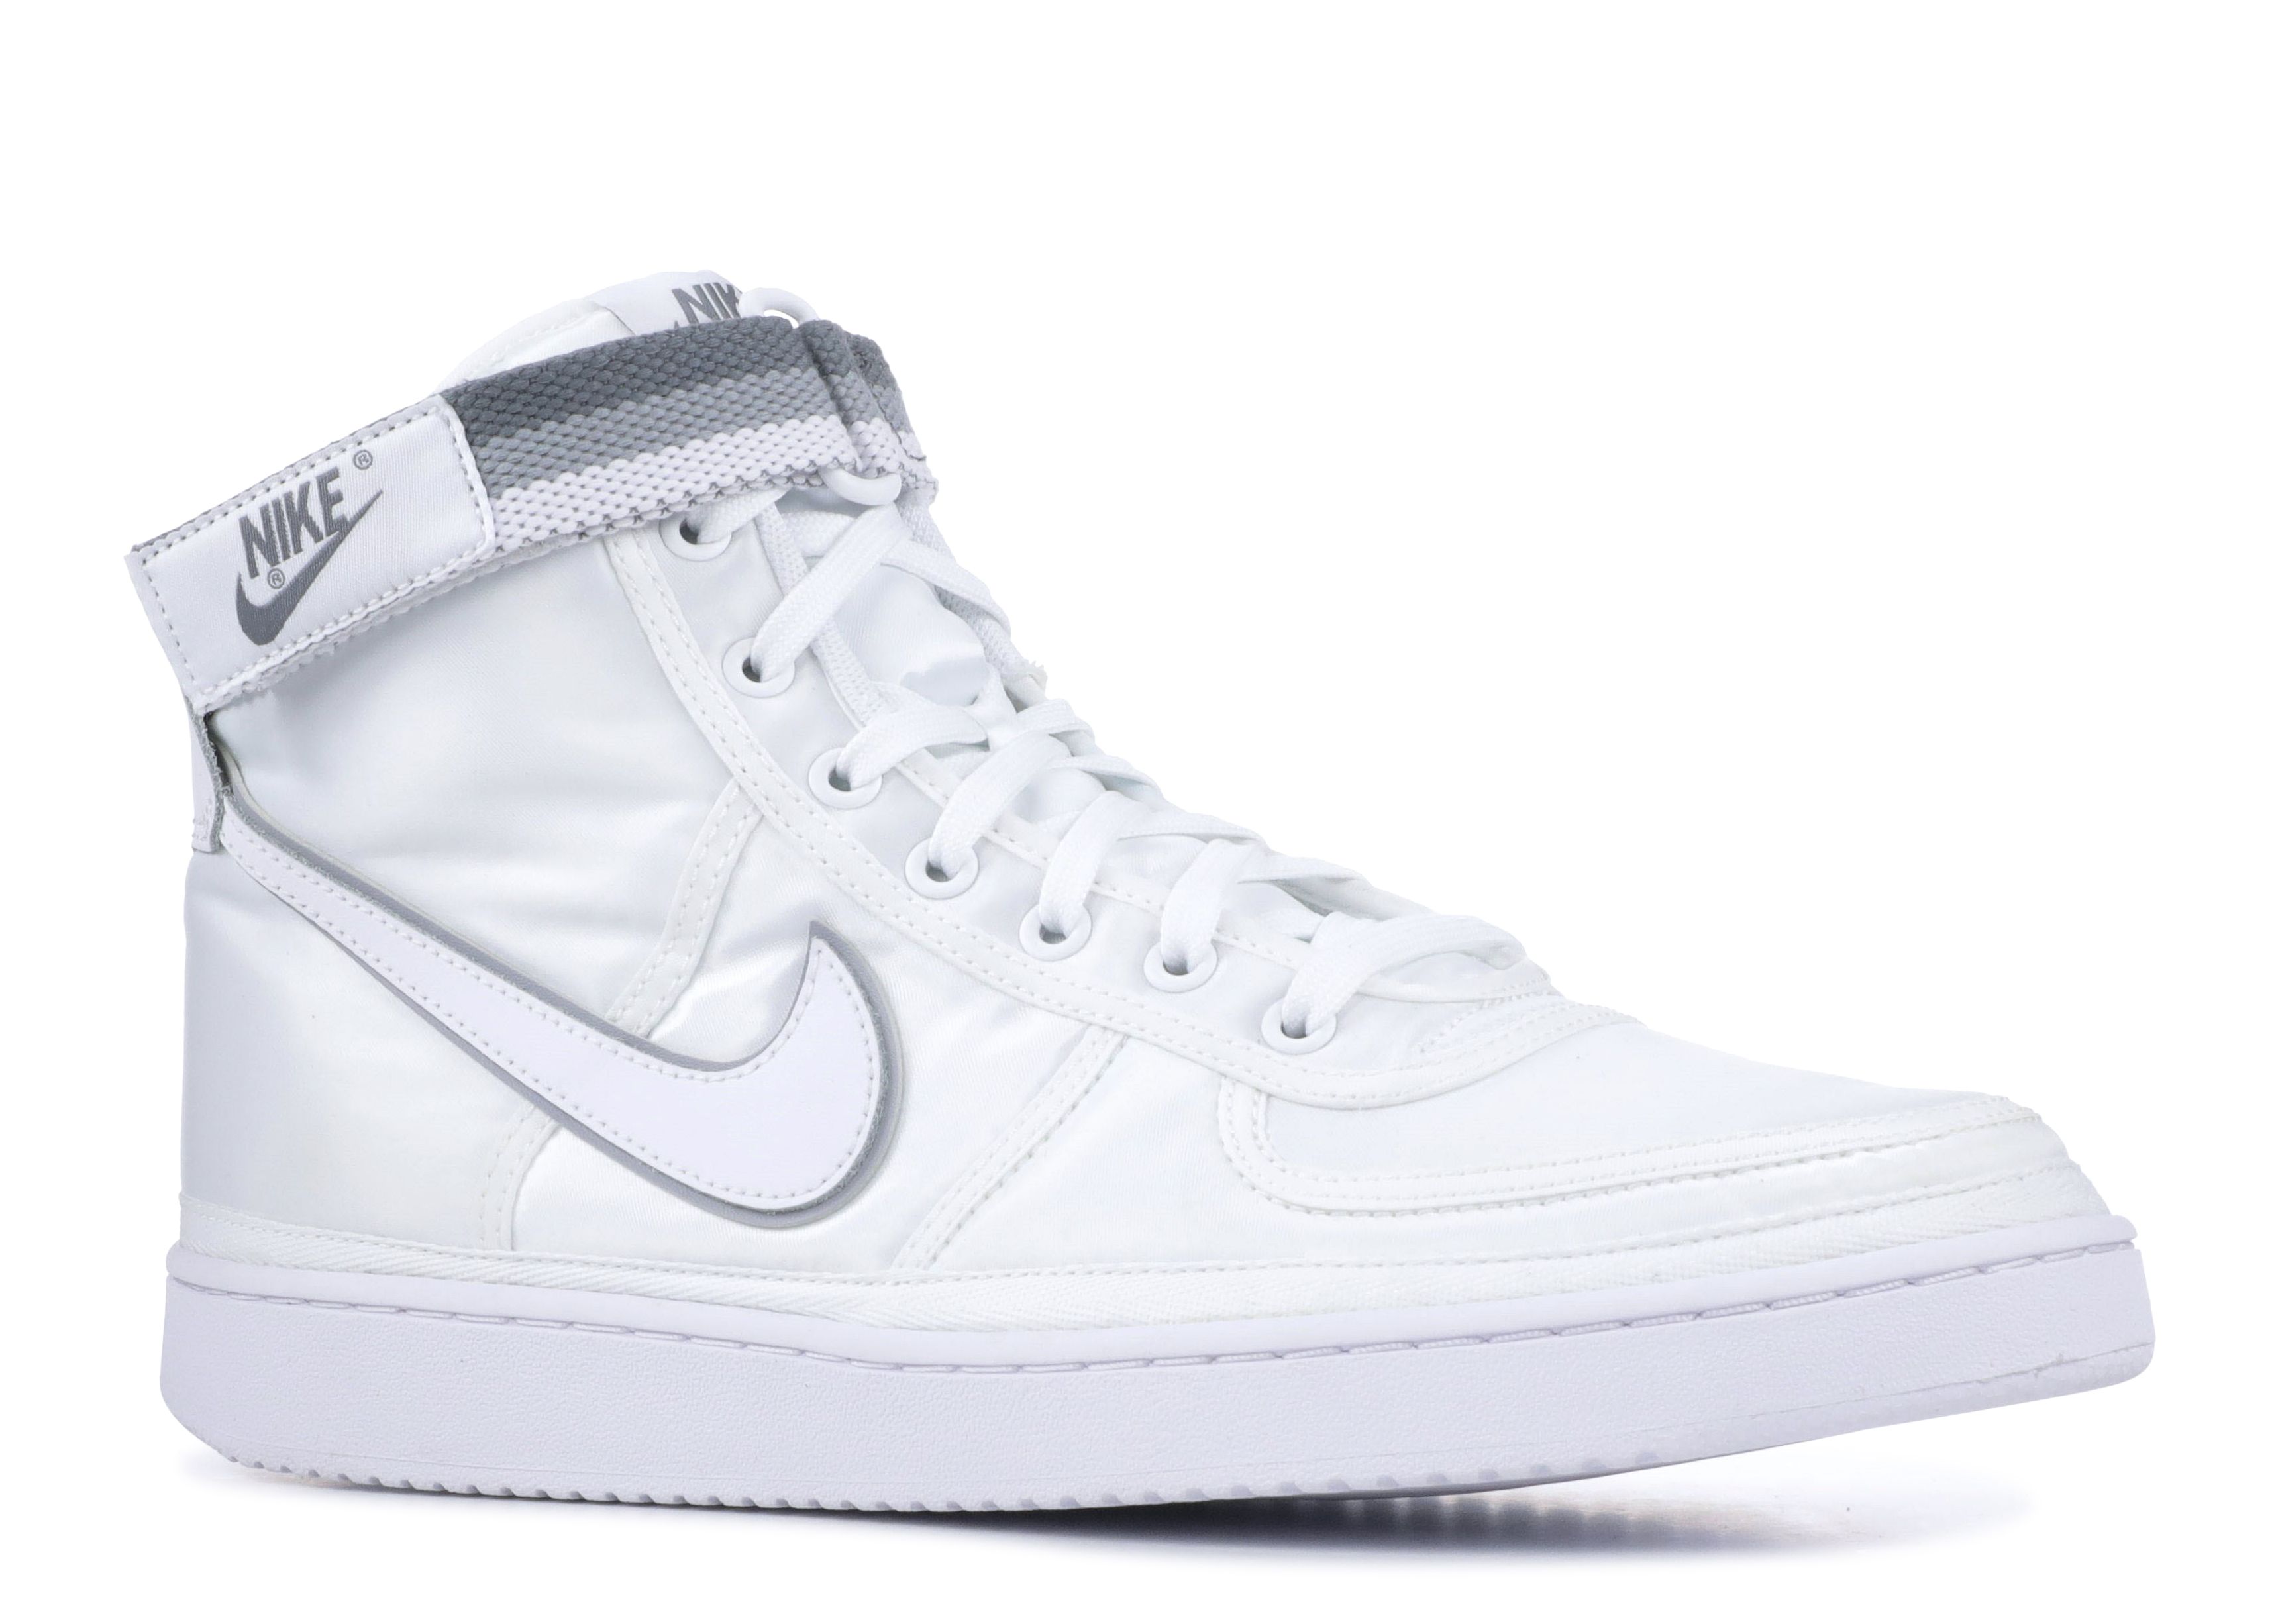 Vandal High Supreme 'White' - Nike - 318330 100 - white/grey